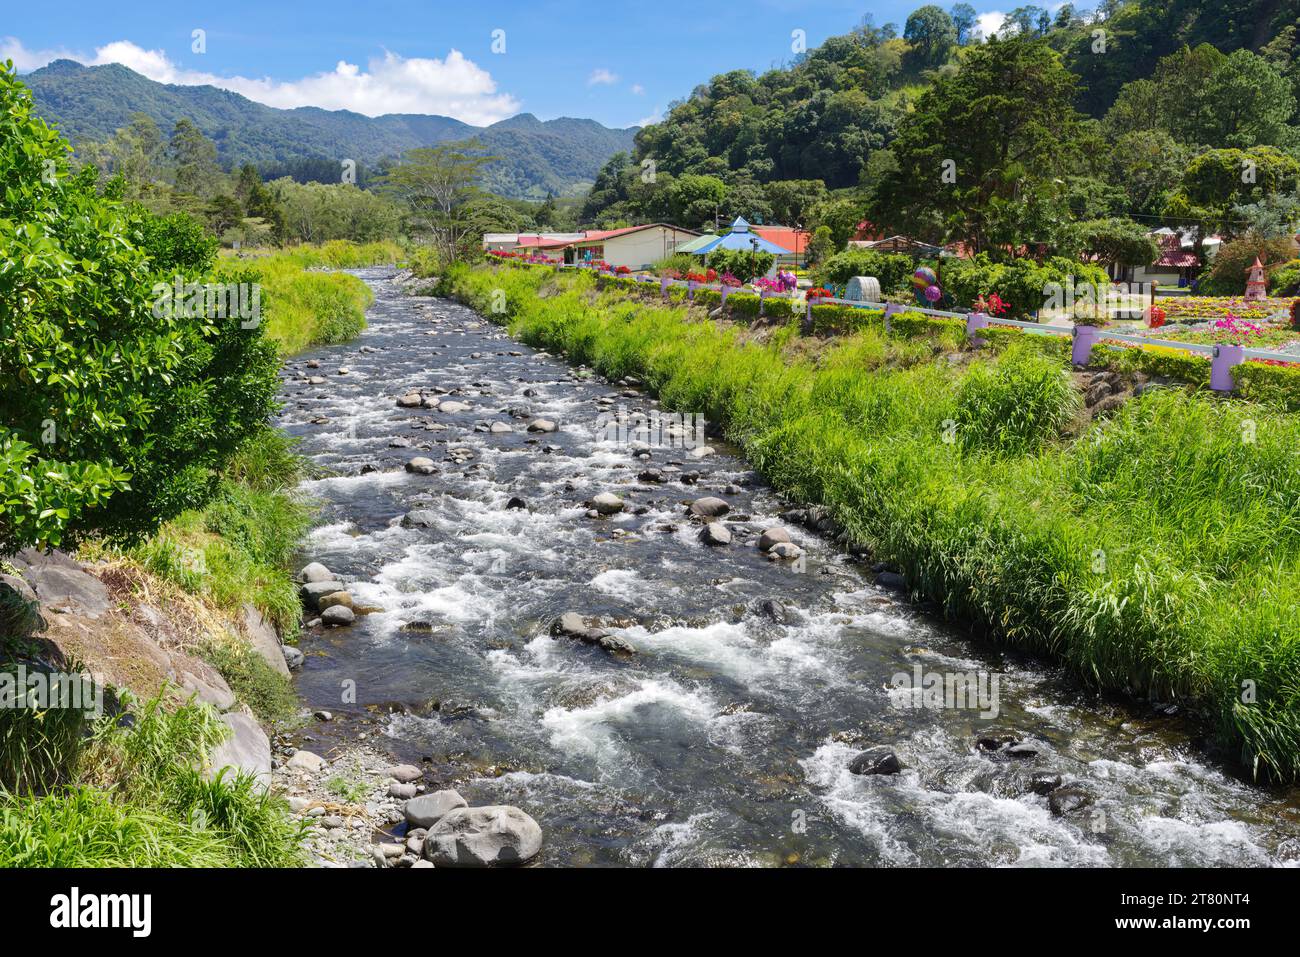 Caldera-Fluss in der Stadt Boquete, Provinz Chiriqui, Panama. Stockfoto